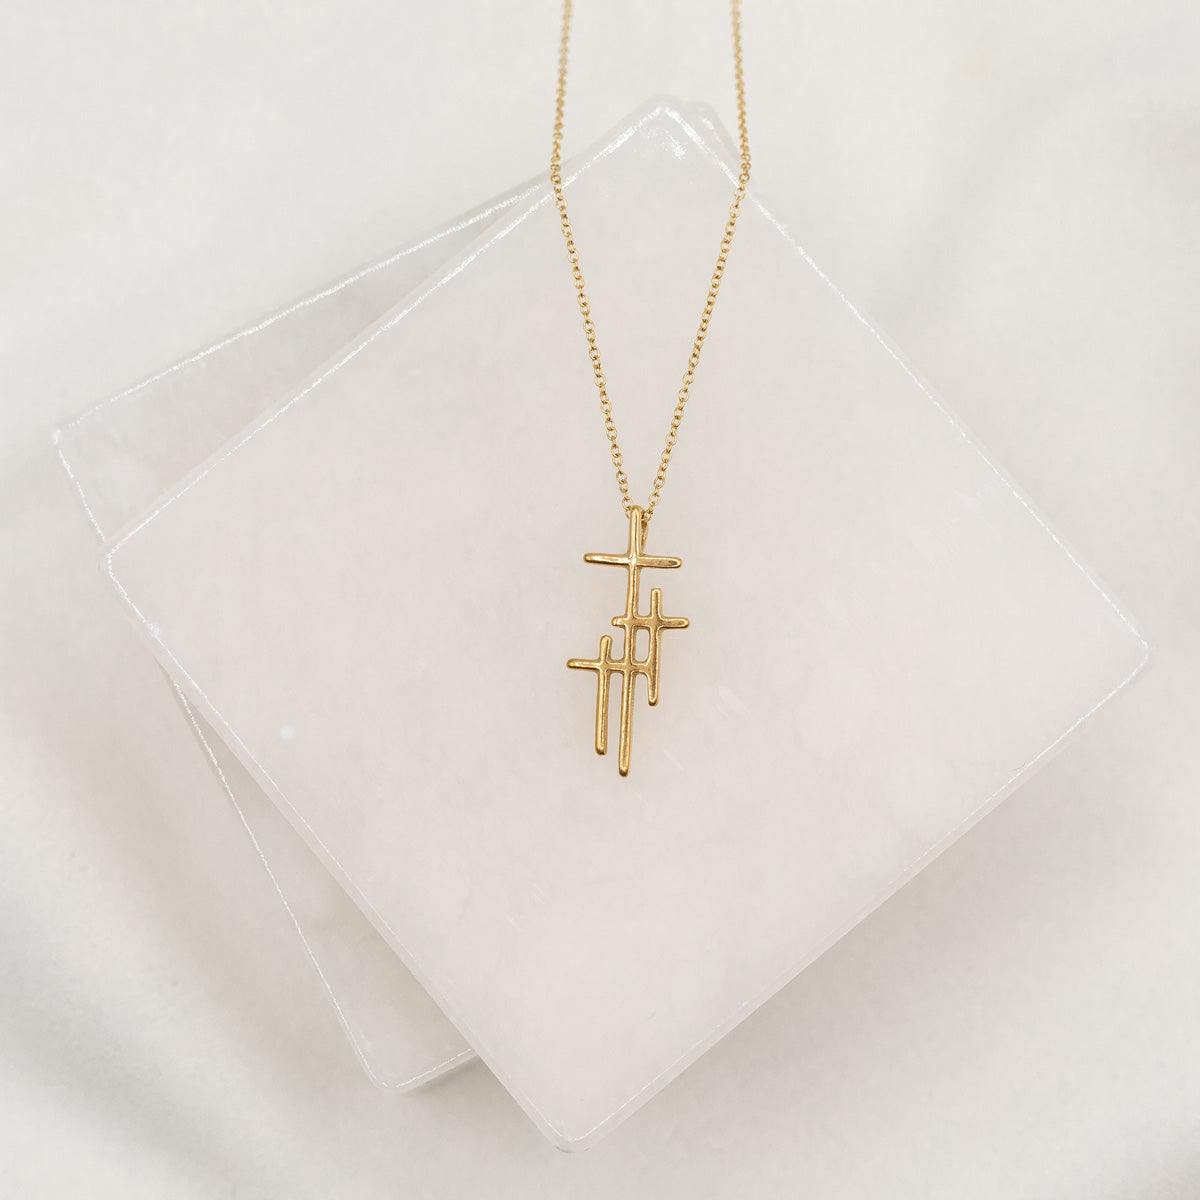 Best Friends Forever Cross Pendant Necklaces Set of 3 | Cross pendant  necklace, Bff necklaces, Necklace